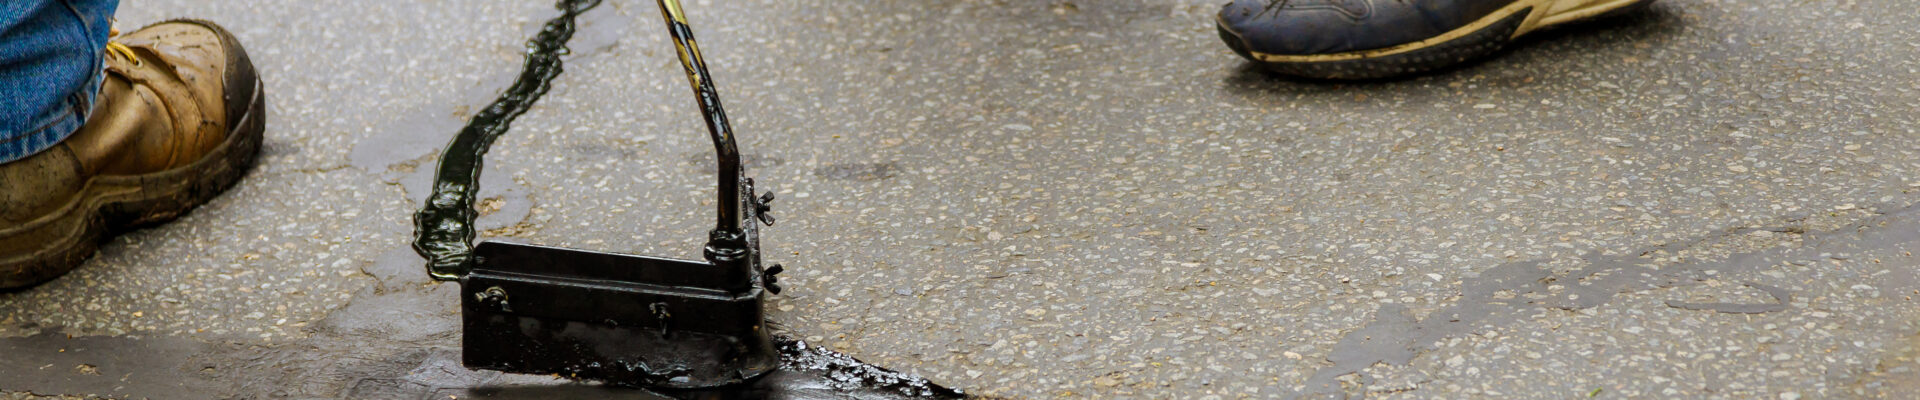 Asphalt-road-with-filled-cracks-repair-liquid-of-the-fix-road